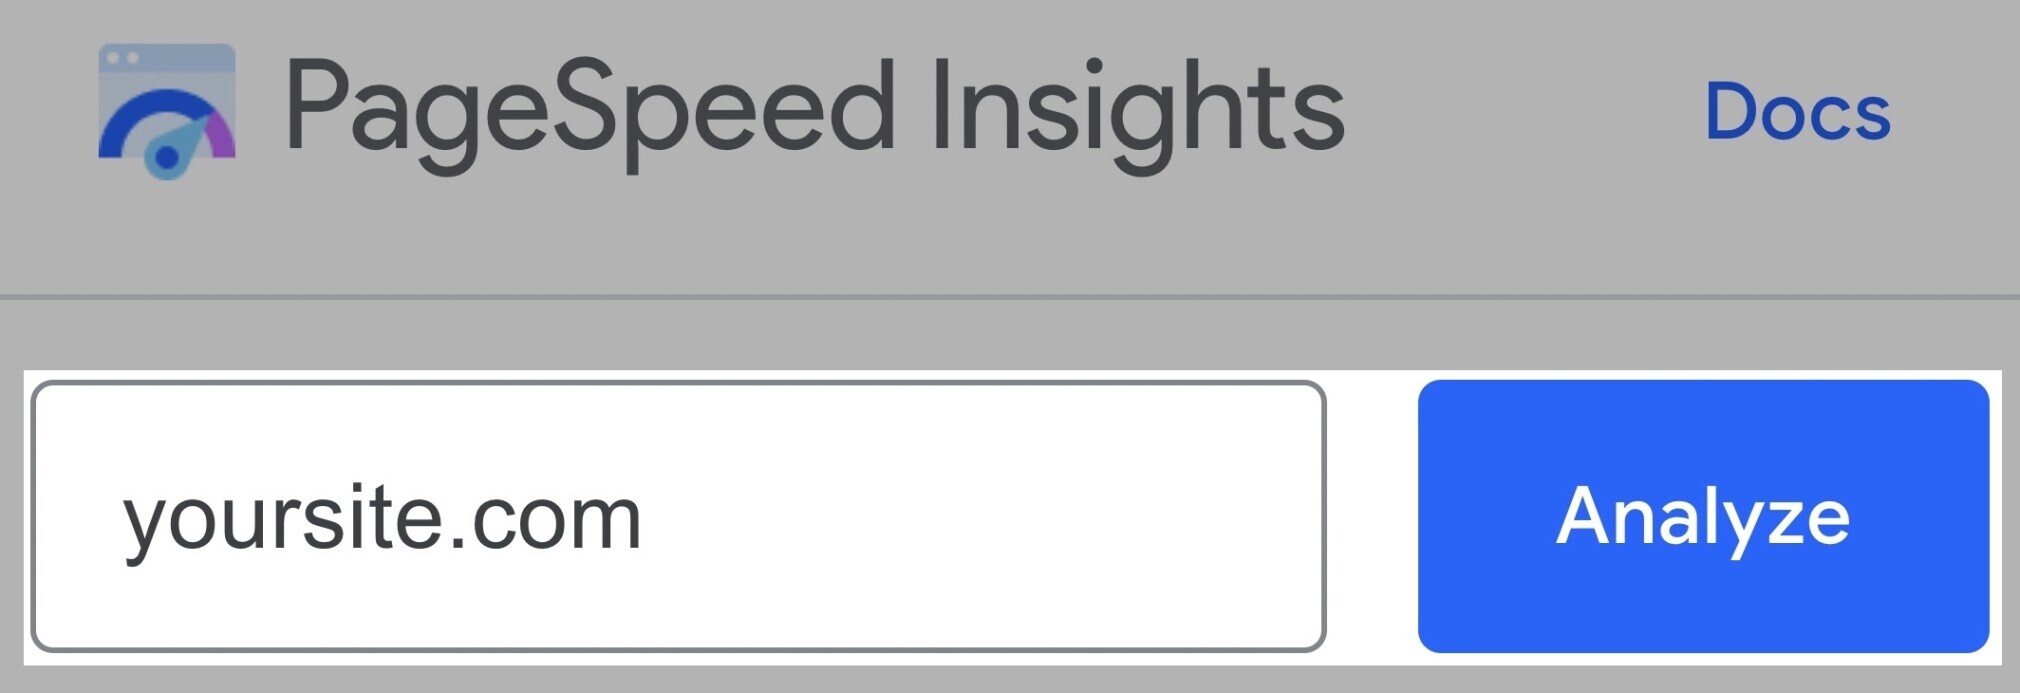 page speed insights tool analyze